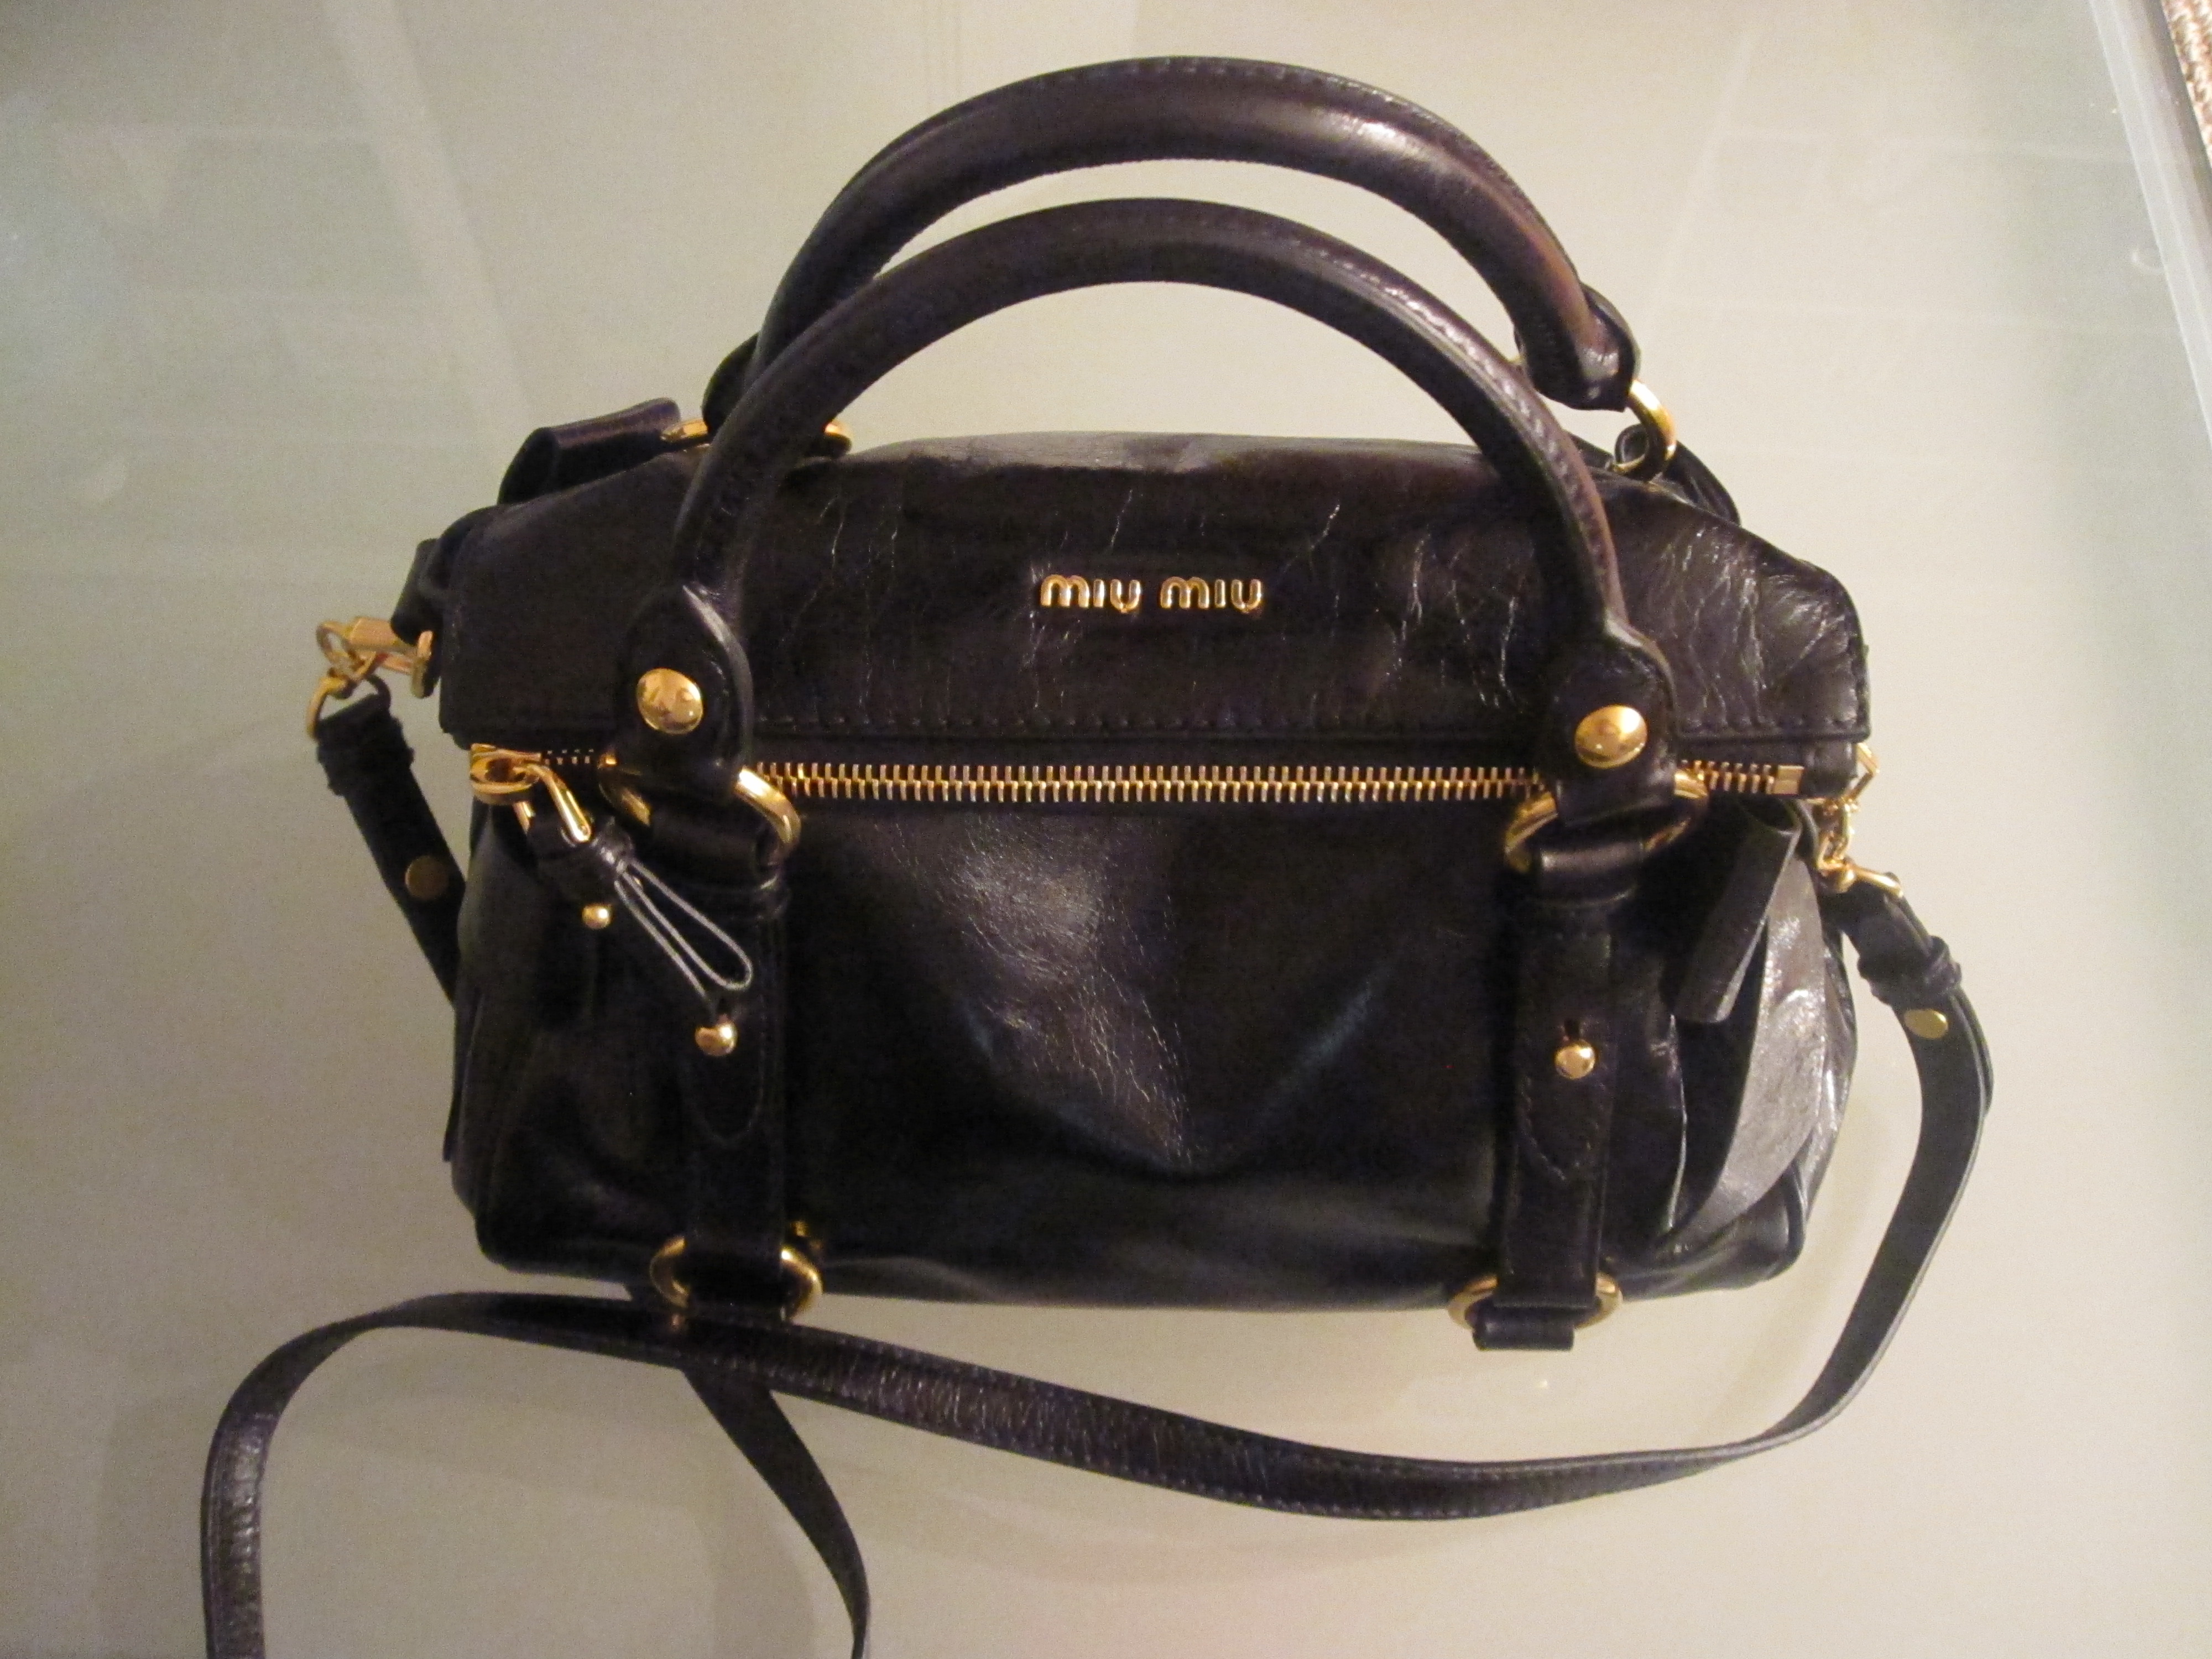 My new Miu Miu bow bag